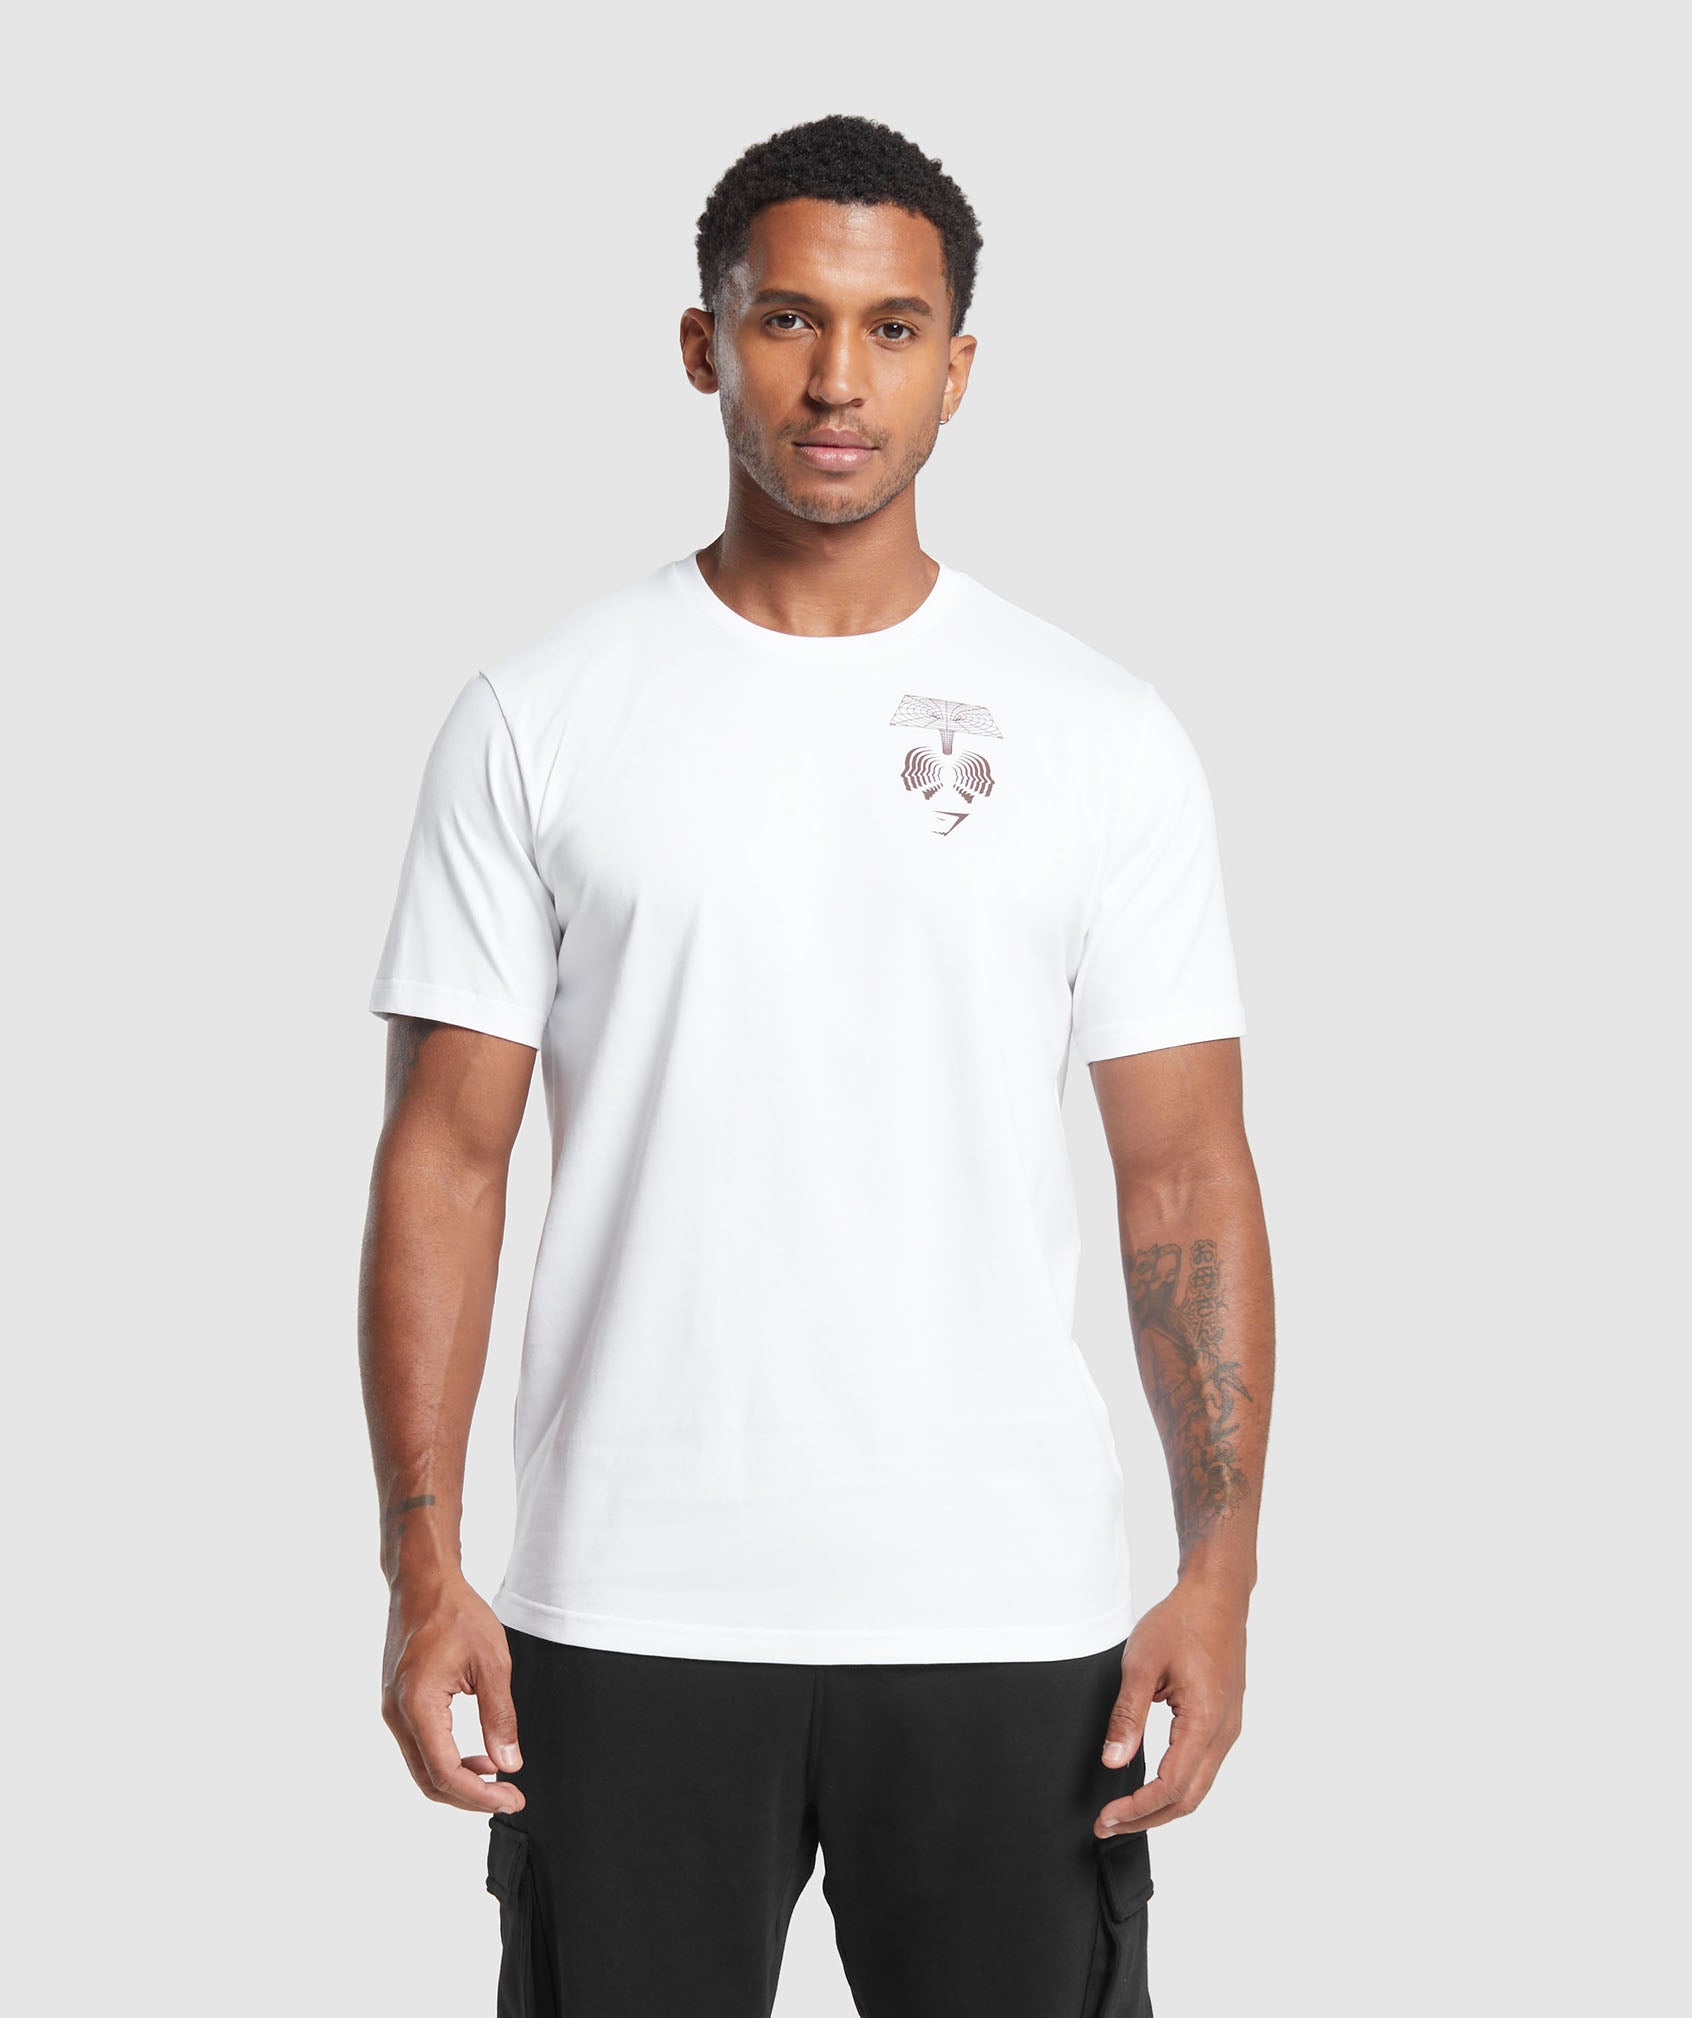 Hybrid Wellness T-Shirt in White - view 2